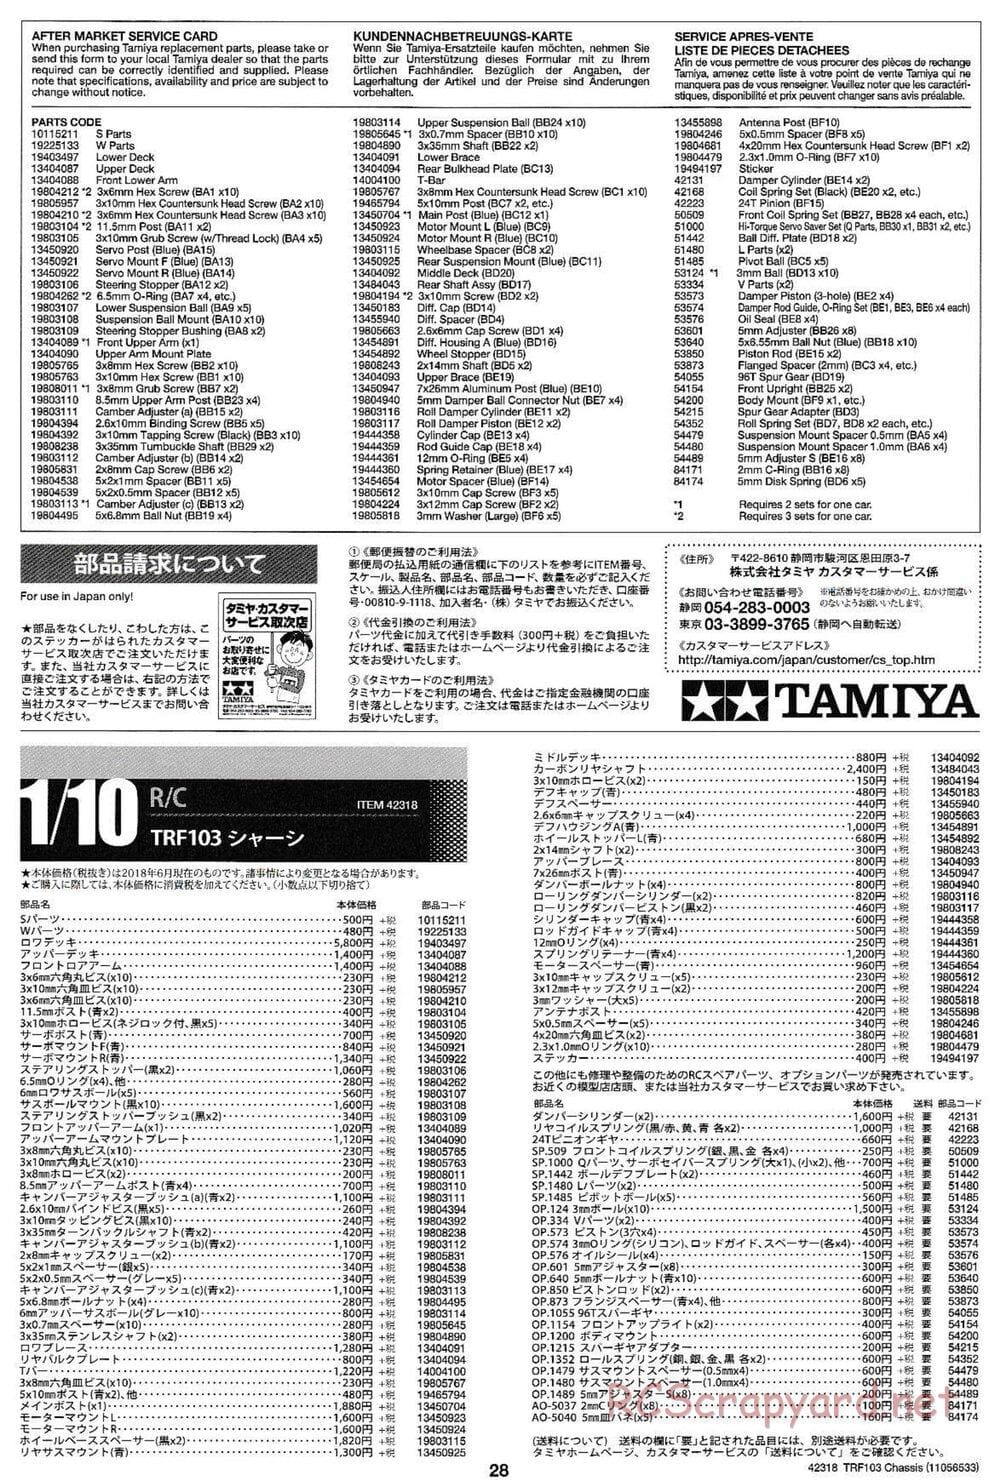 Tamiya - TRF103 Chassis - Manual - Page 28